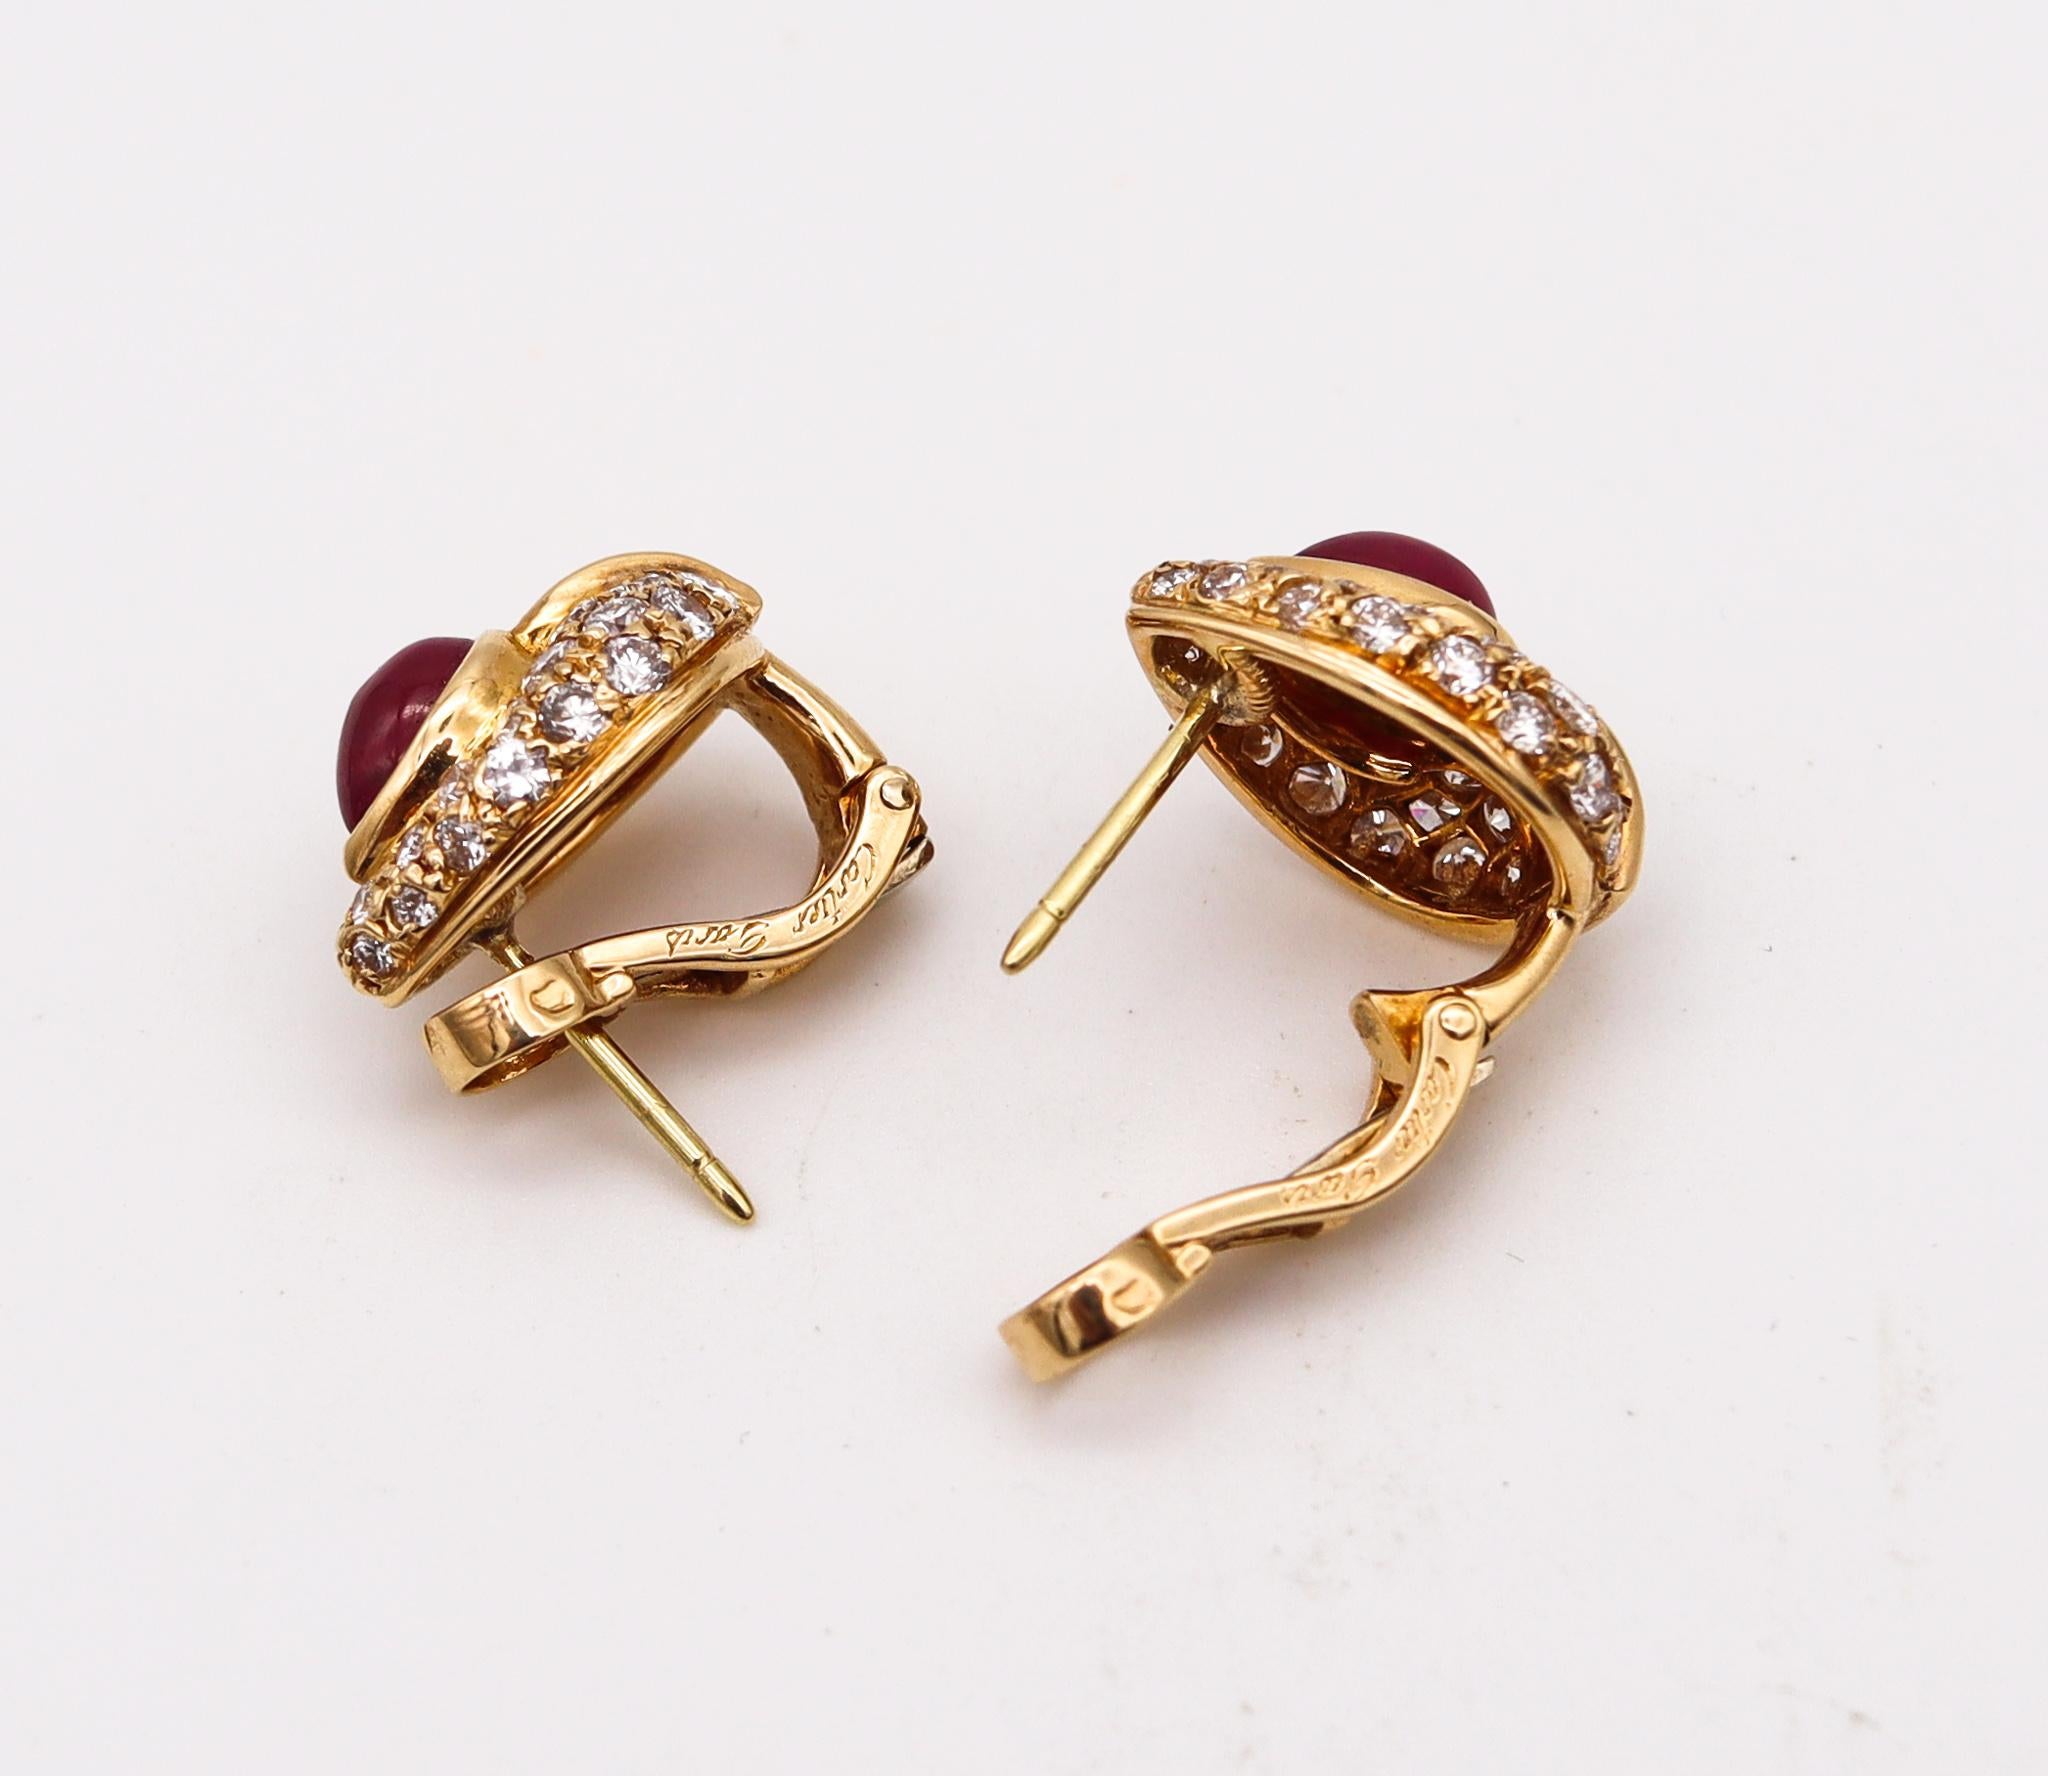 Cabochon Cartier George L'enfant Earrings 18Kt Gold 5.44 Cts of Burmese Rubies & Diamonds